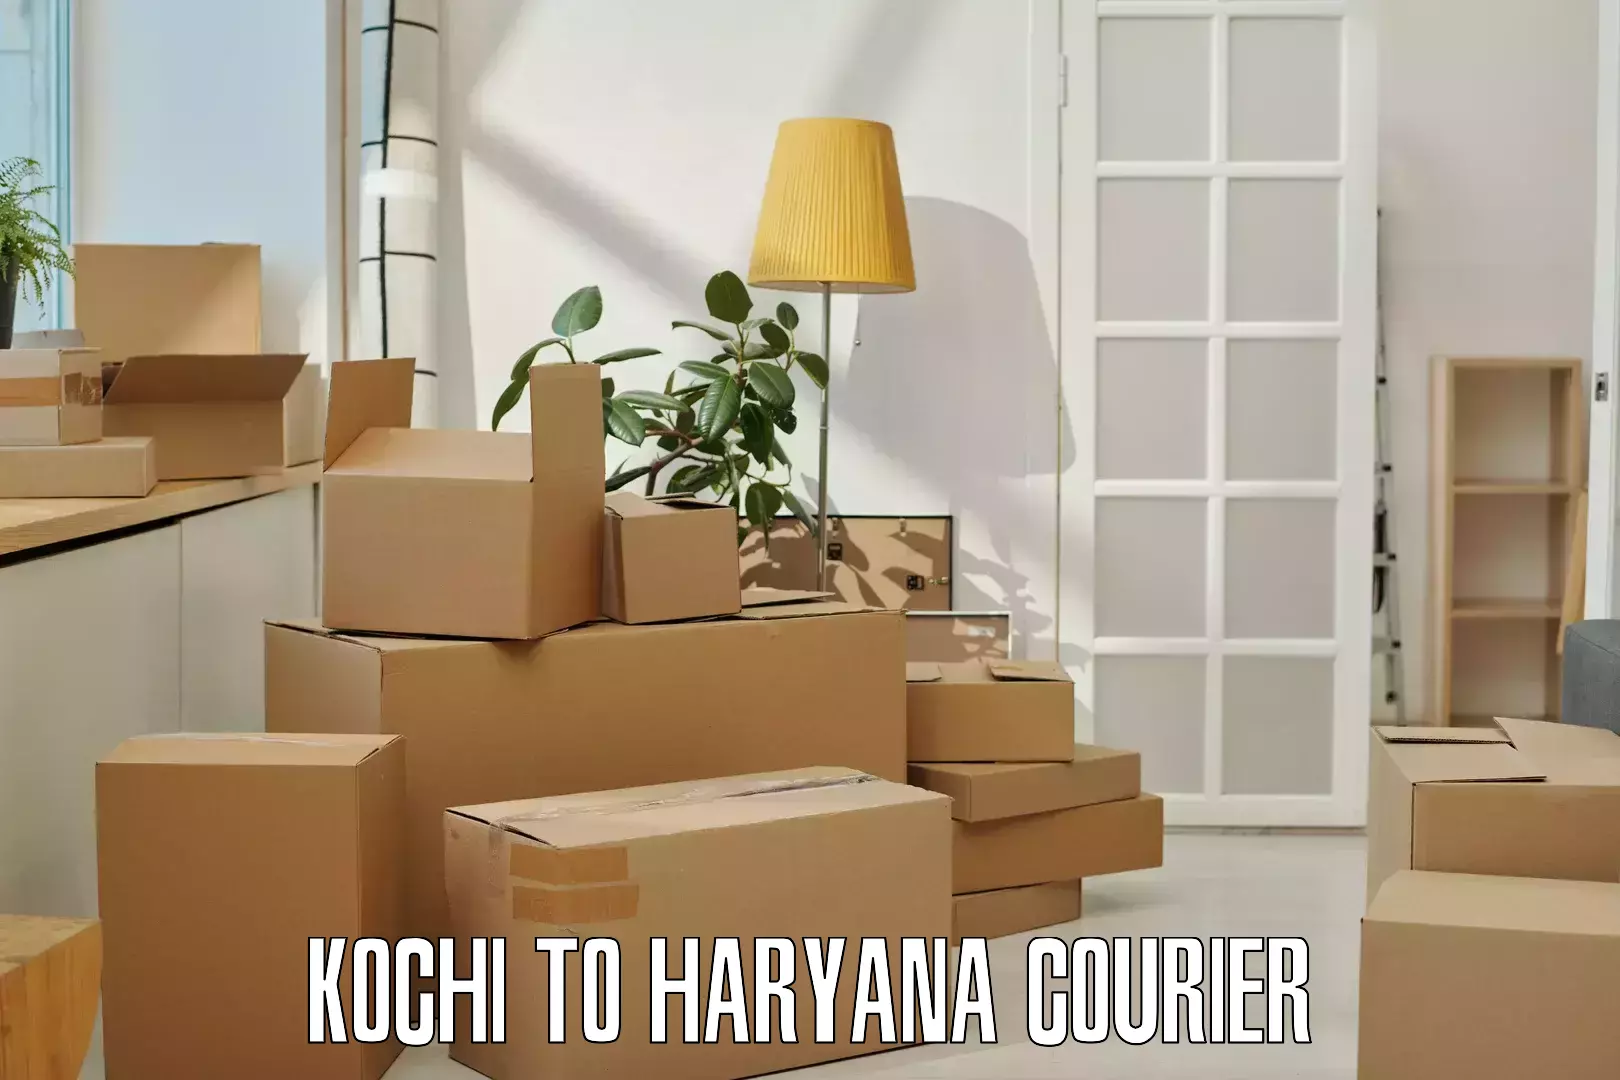 Full-service courier options Kochi to Haryana